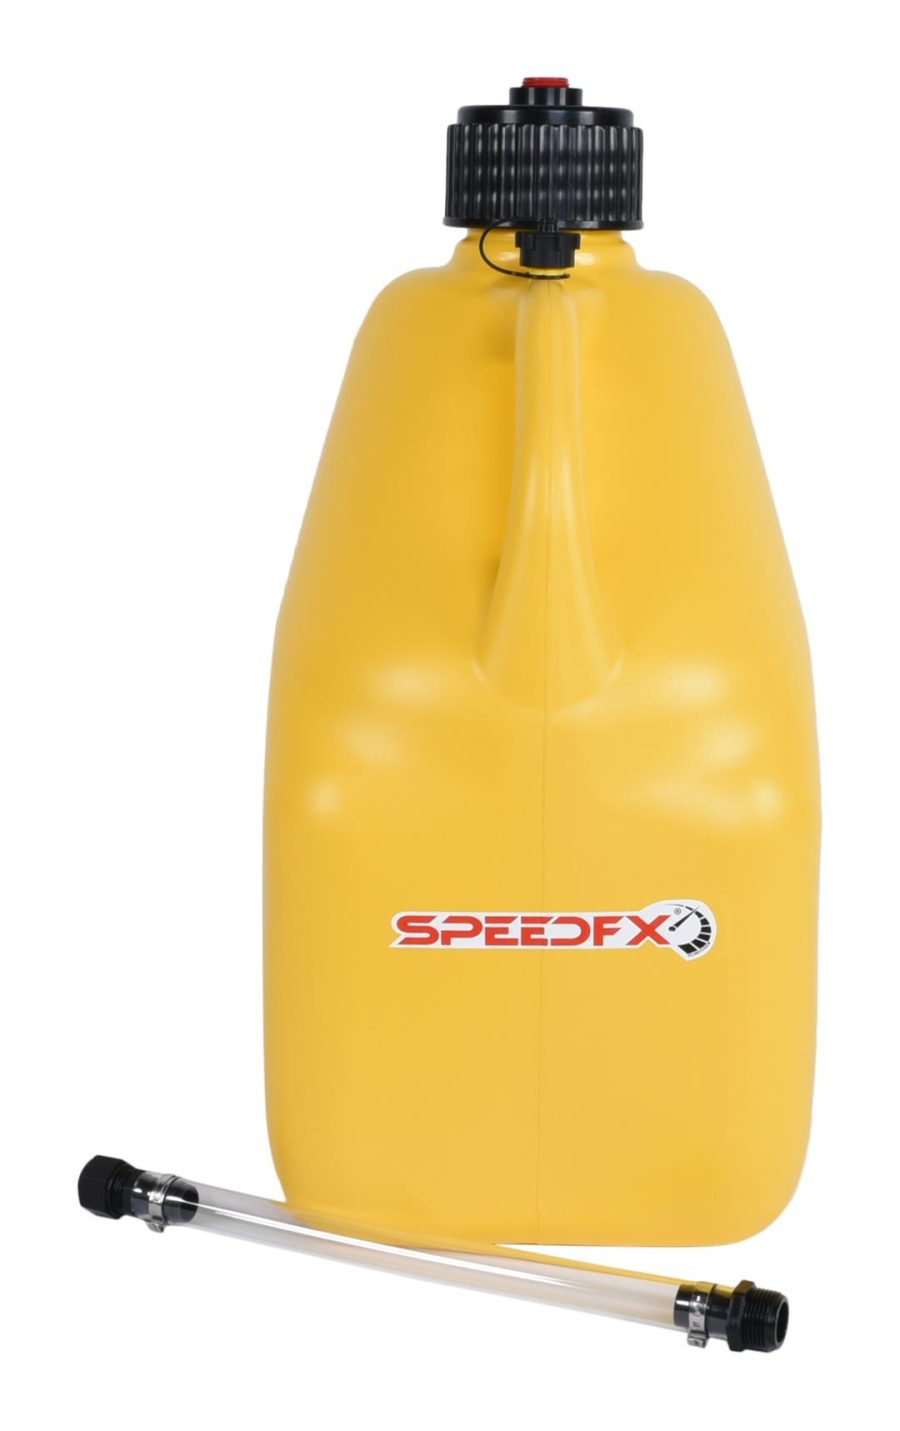 SPEEDFX 8833 Liquid Storage Container 5 Gallon Capacity Yellow Plastic With Filler Hose and Cap